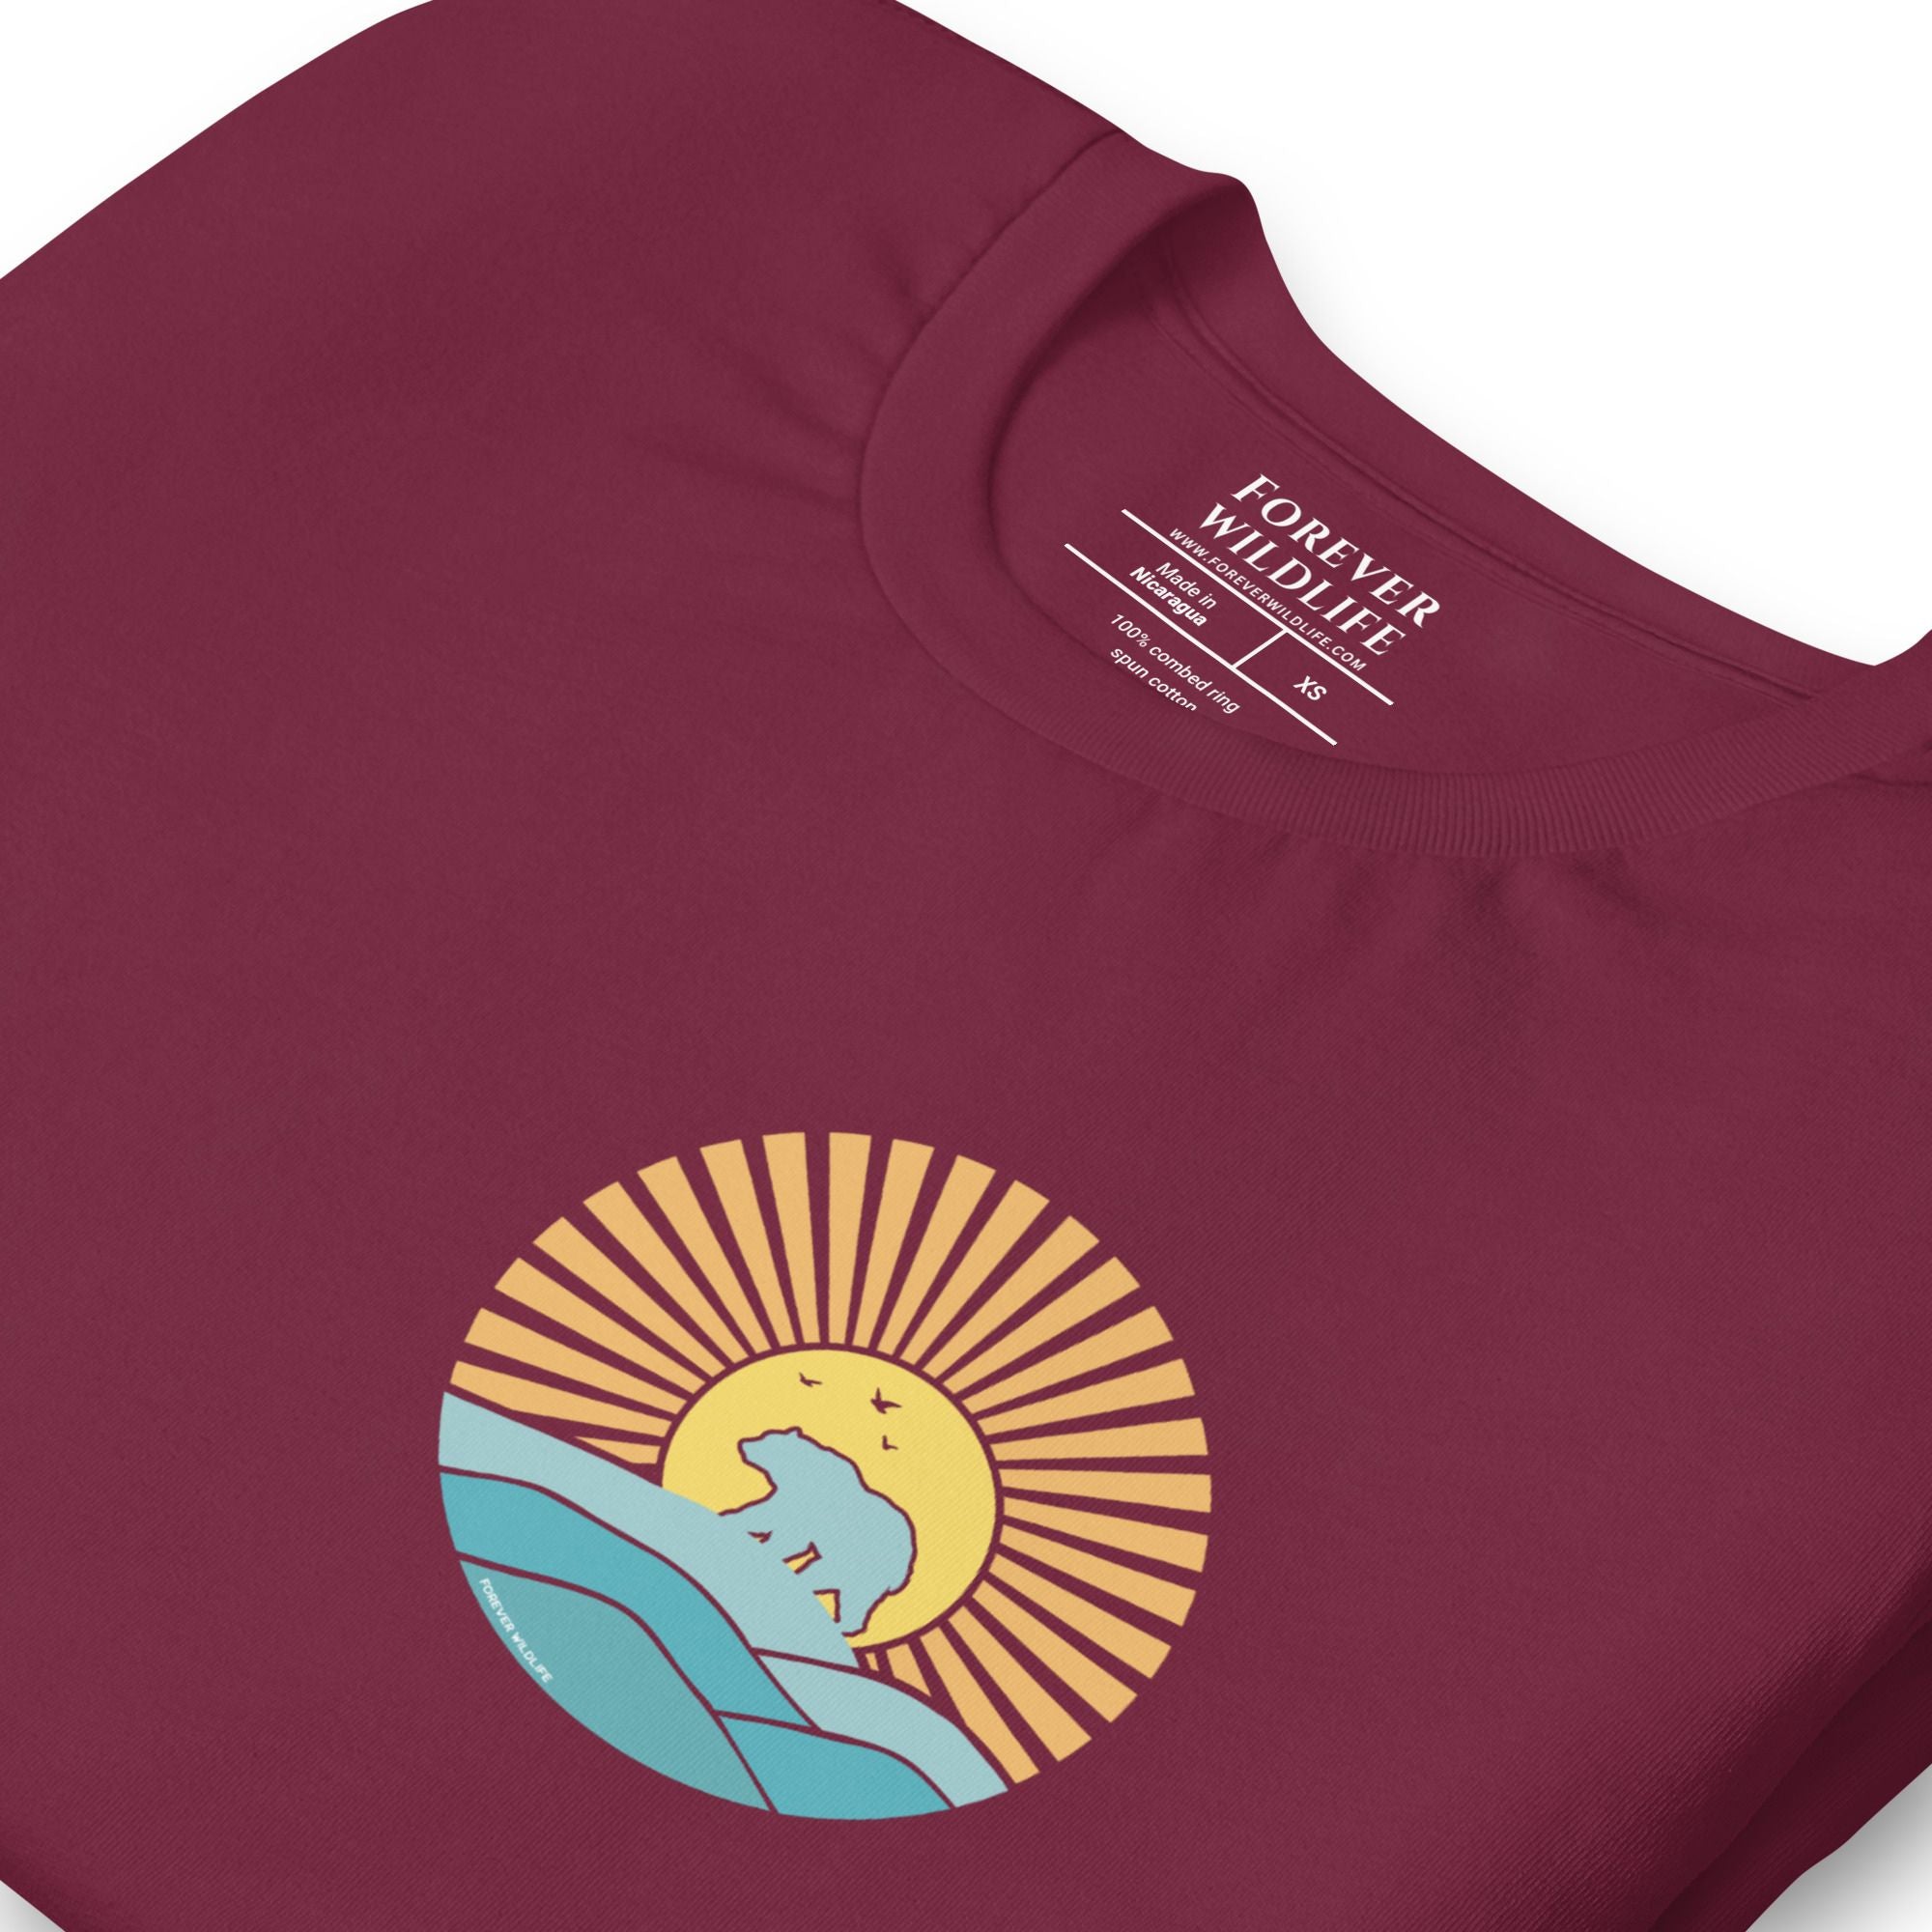 Polar Bear Shirt, stunning maroon Polar Bear T-Shirt with Polar Bear graphic with sunset by Forever Wildlife selling Wildlife T Shirts.